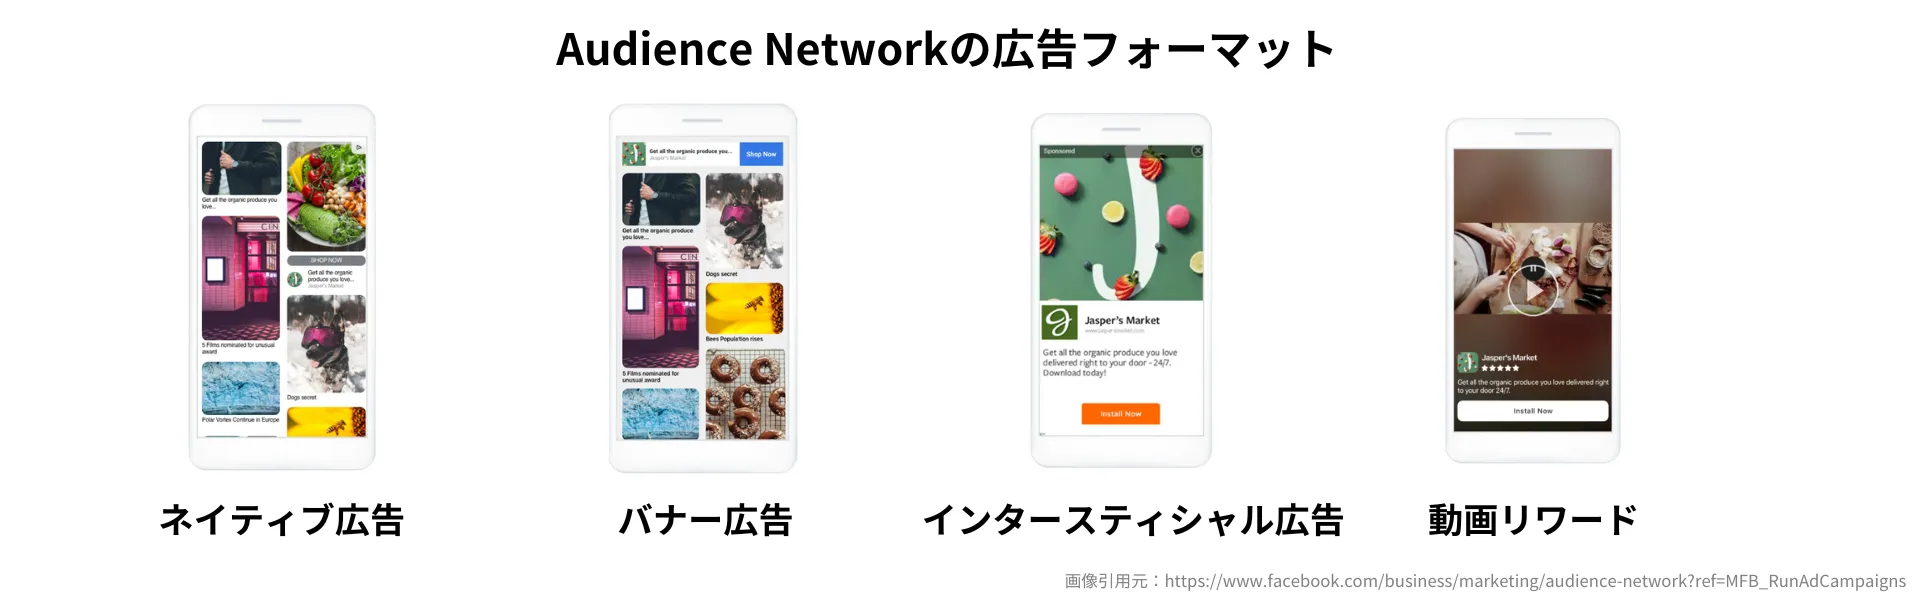 Audience Networkのフォーマット画像